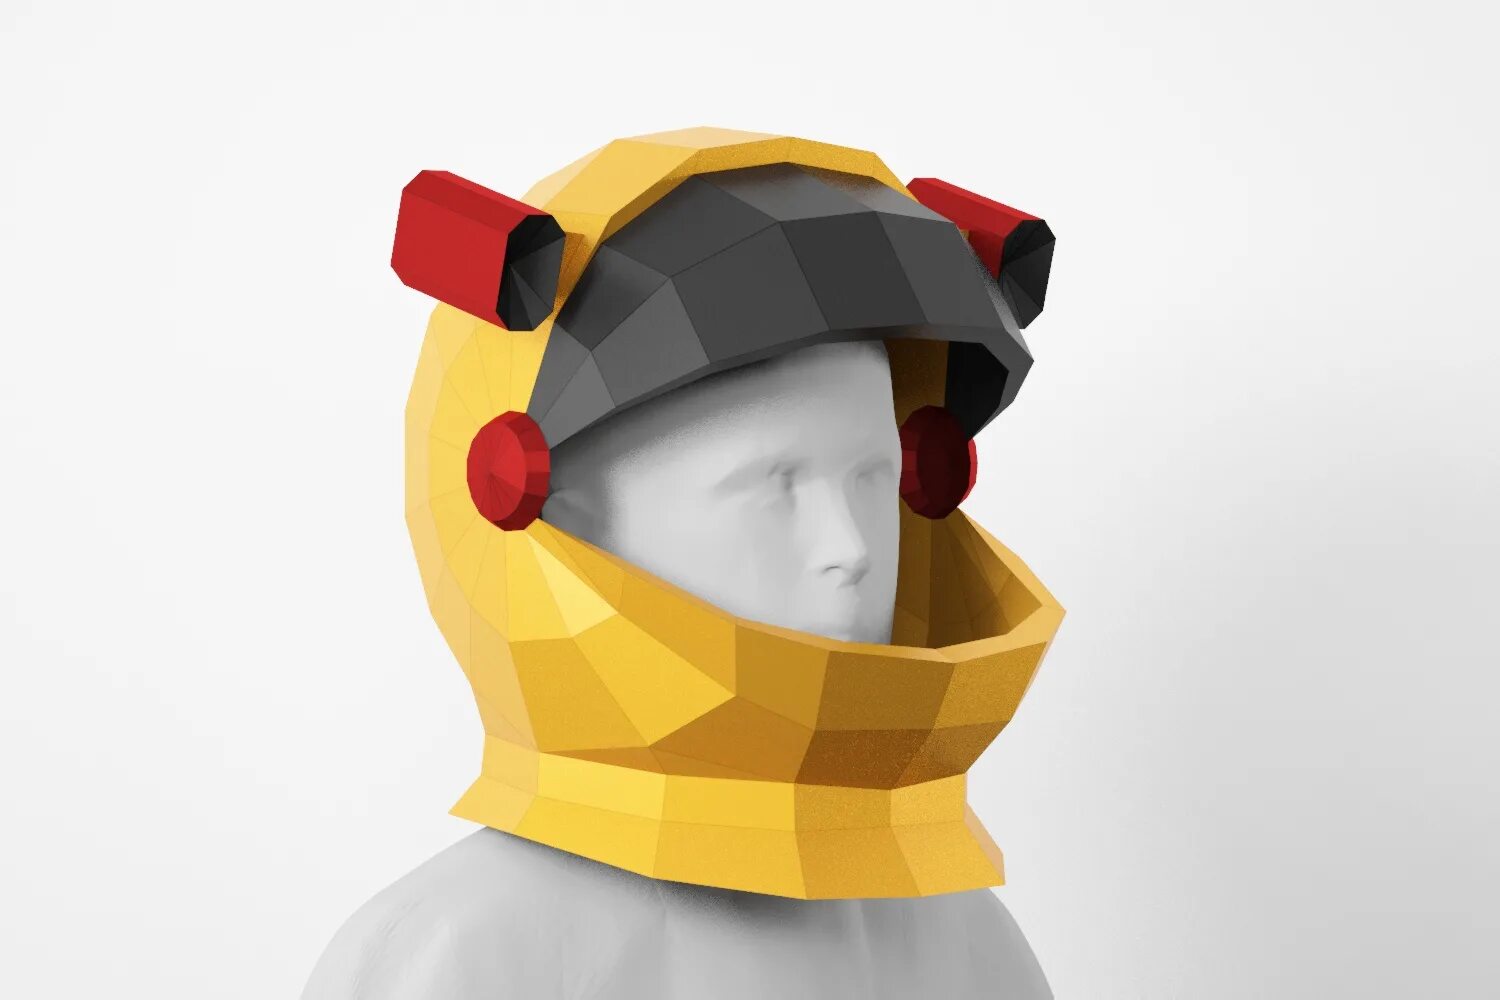 Маска космонавта. Паперкрафт шлем Космонавта. Полигональный шлем. Полигональный космический шлем. Полигональные маски.